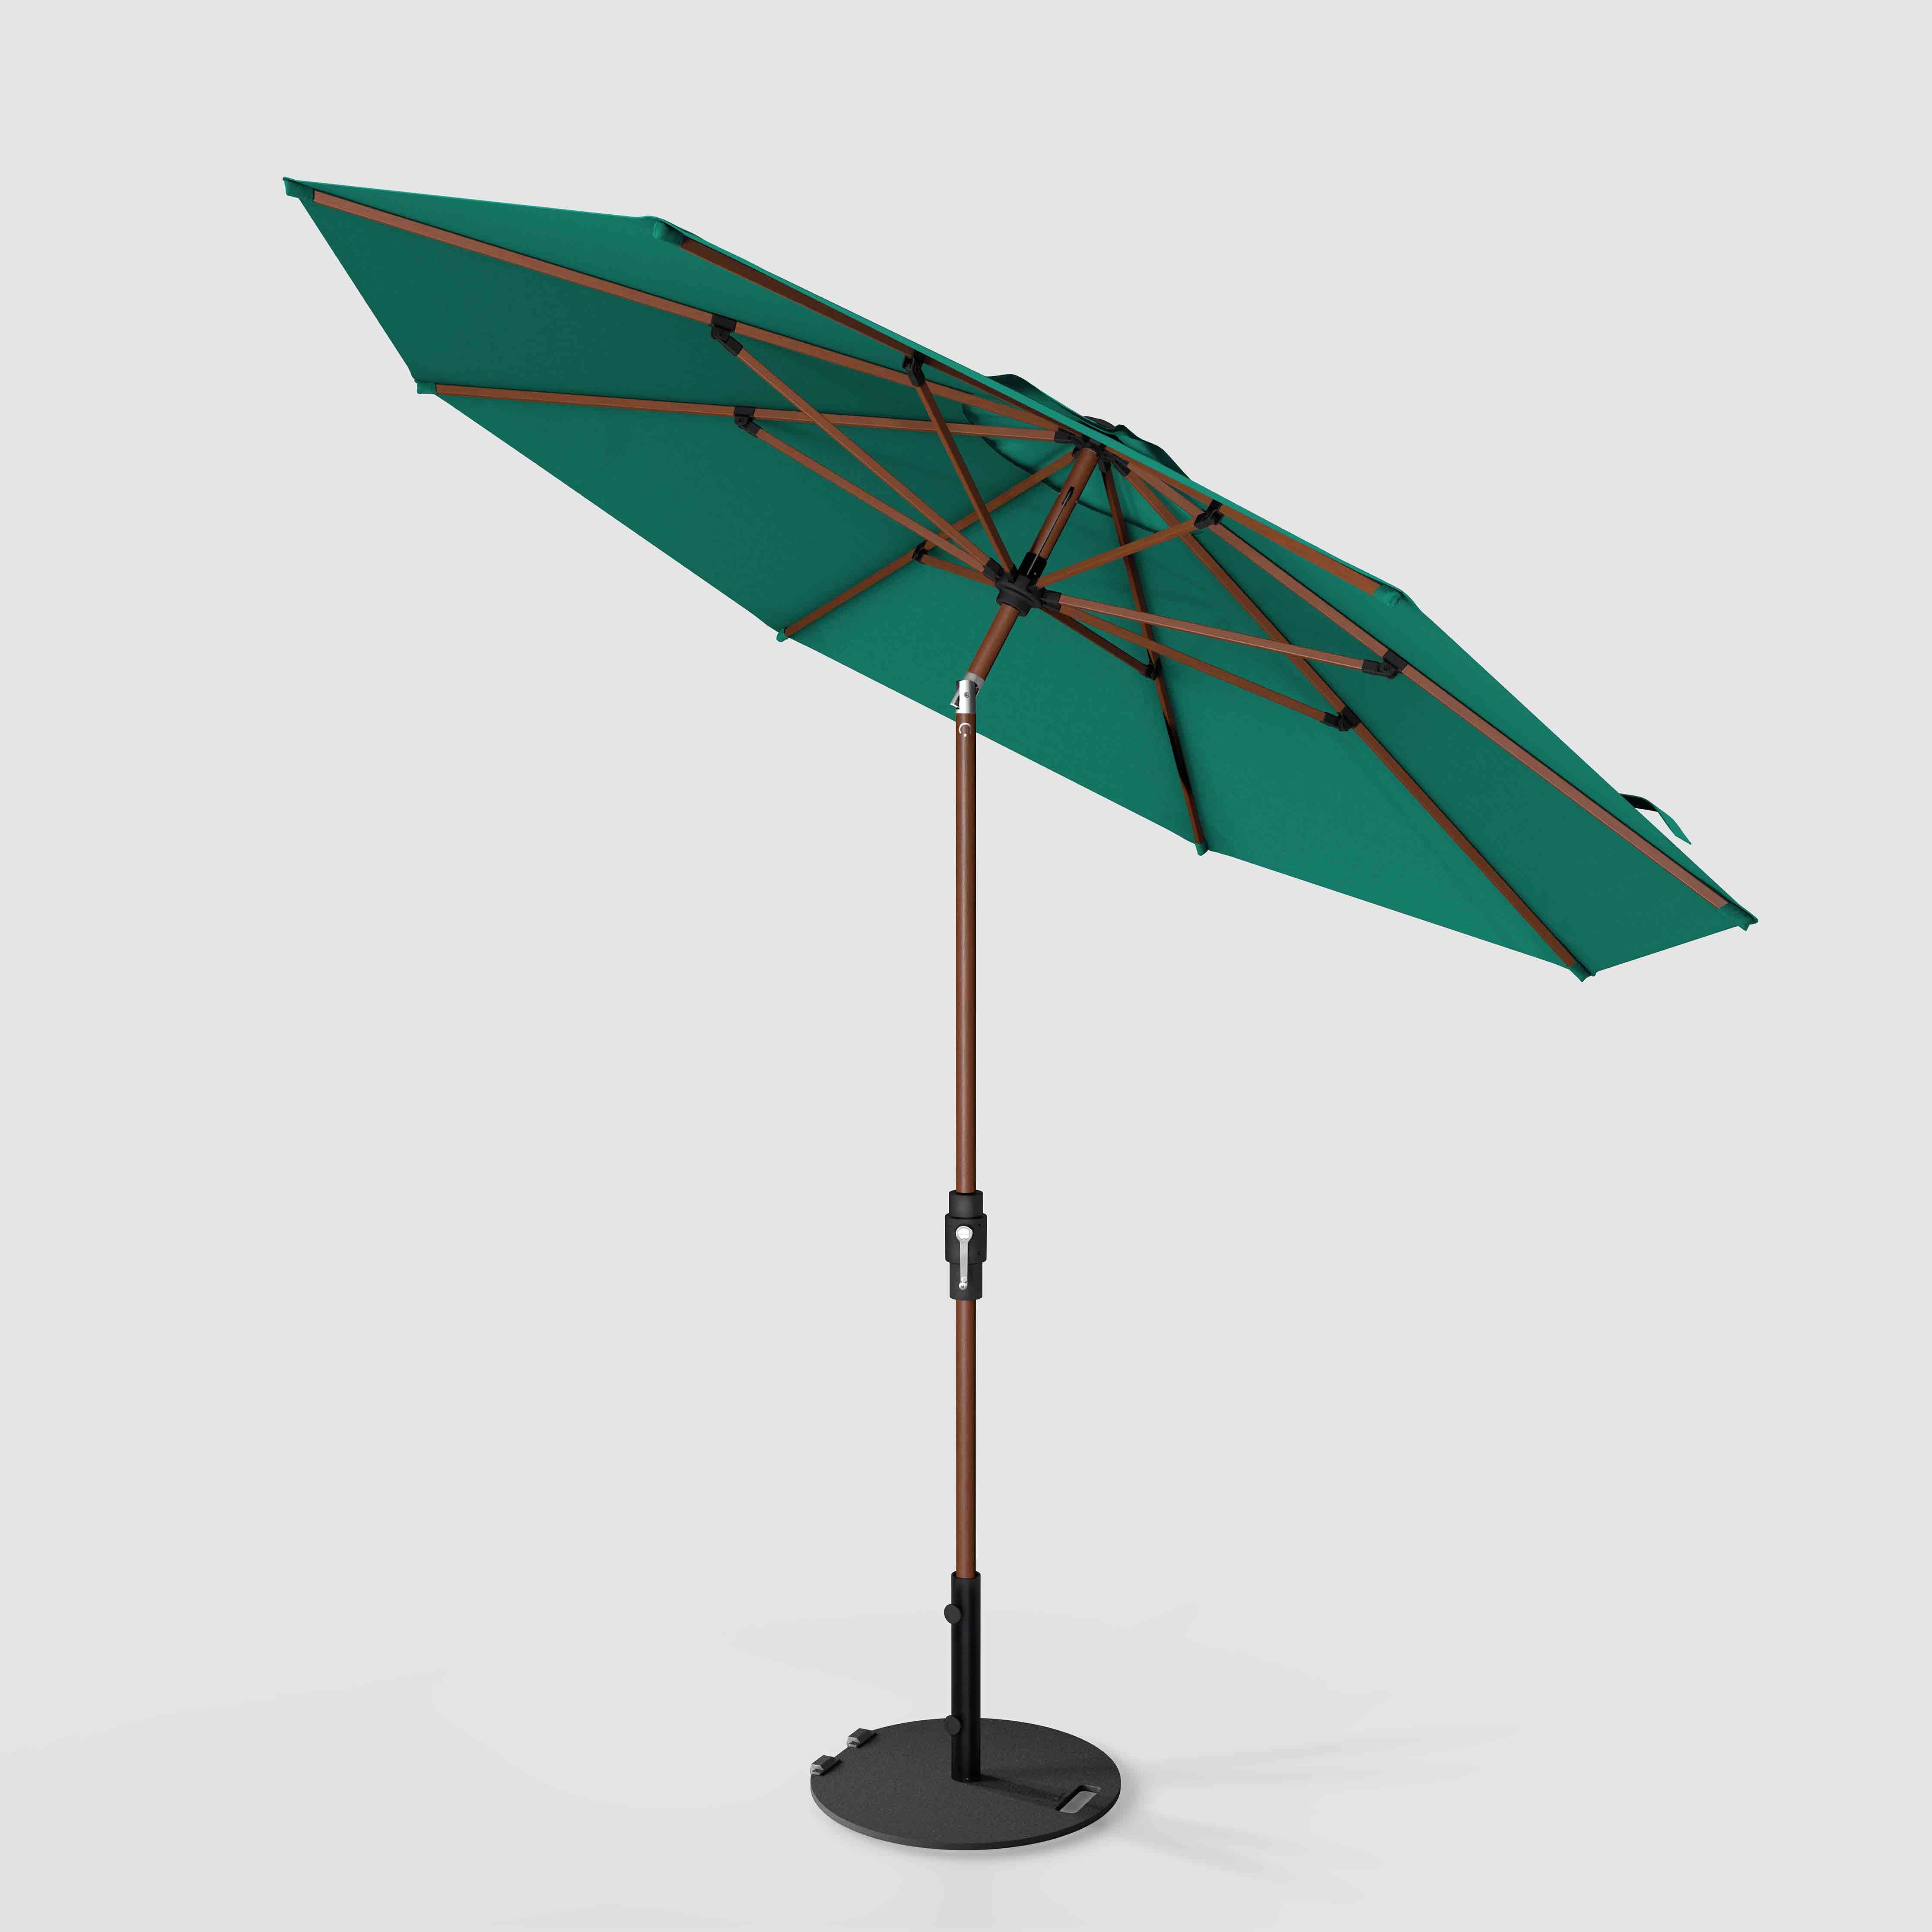 The Wooden 2™ - Sunbrella Canvas Teal